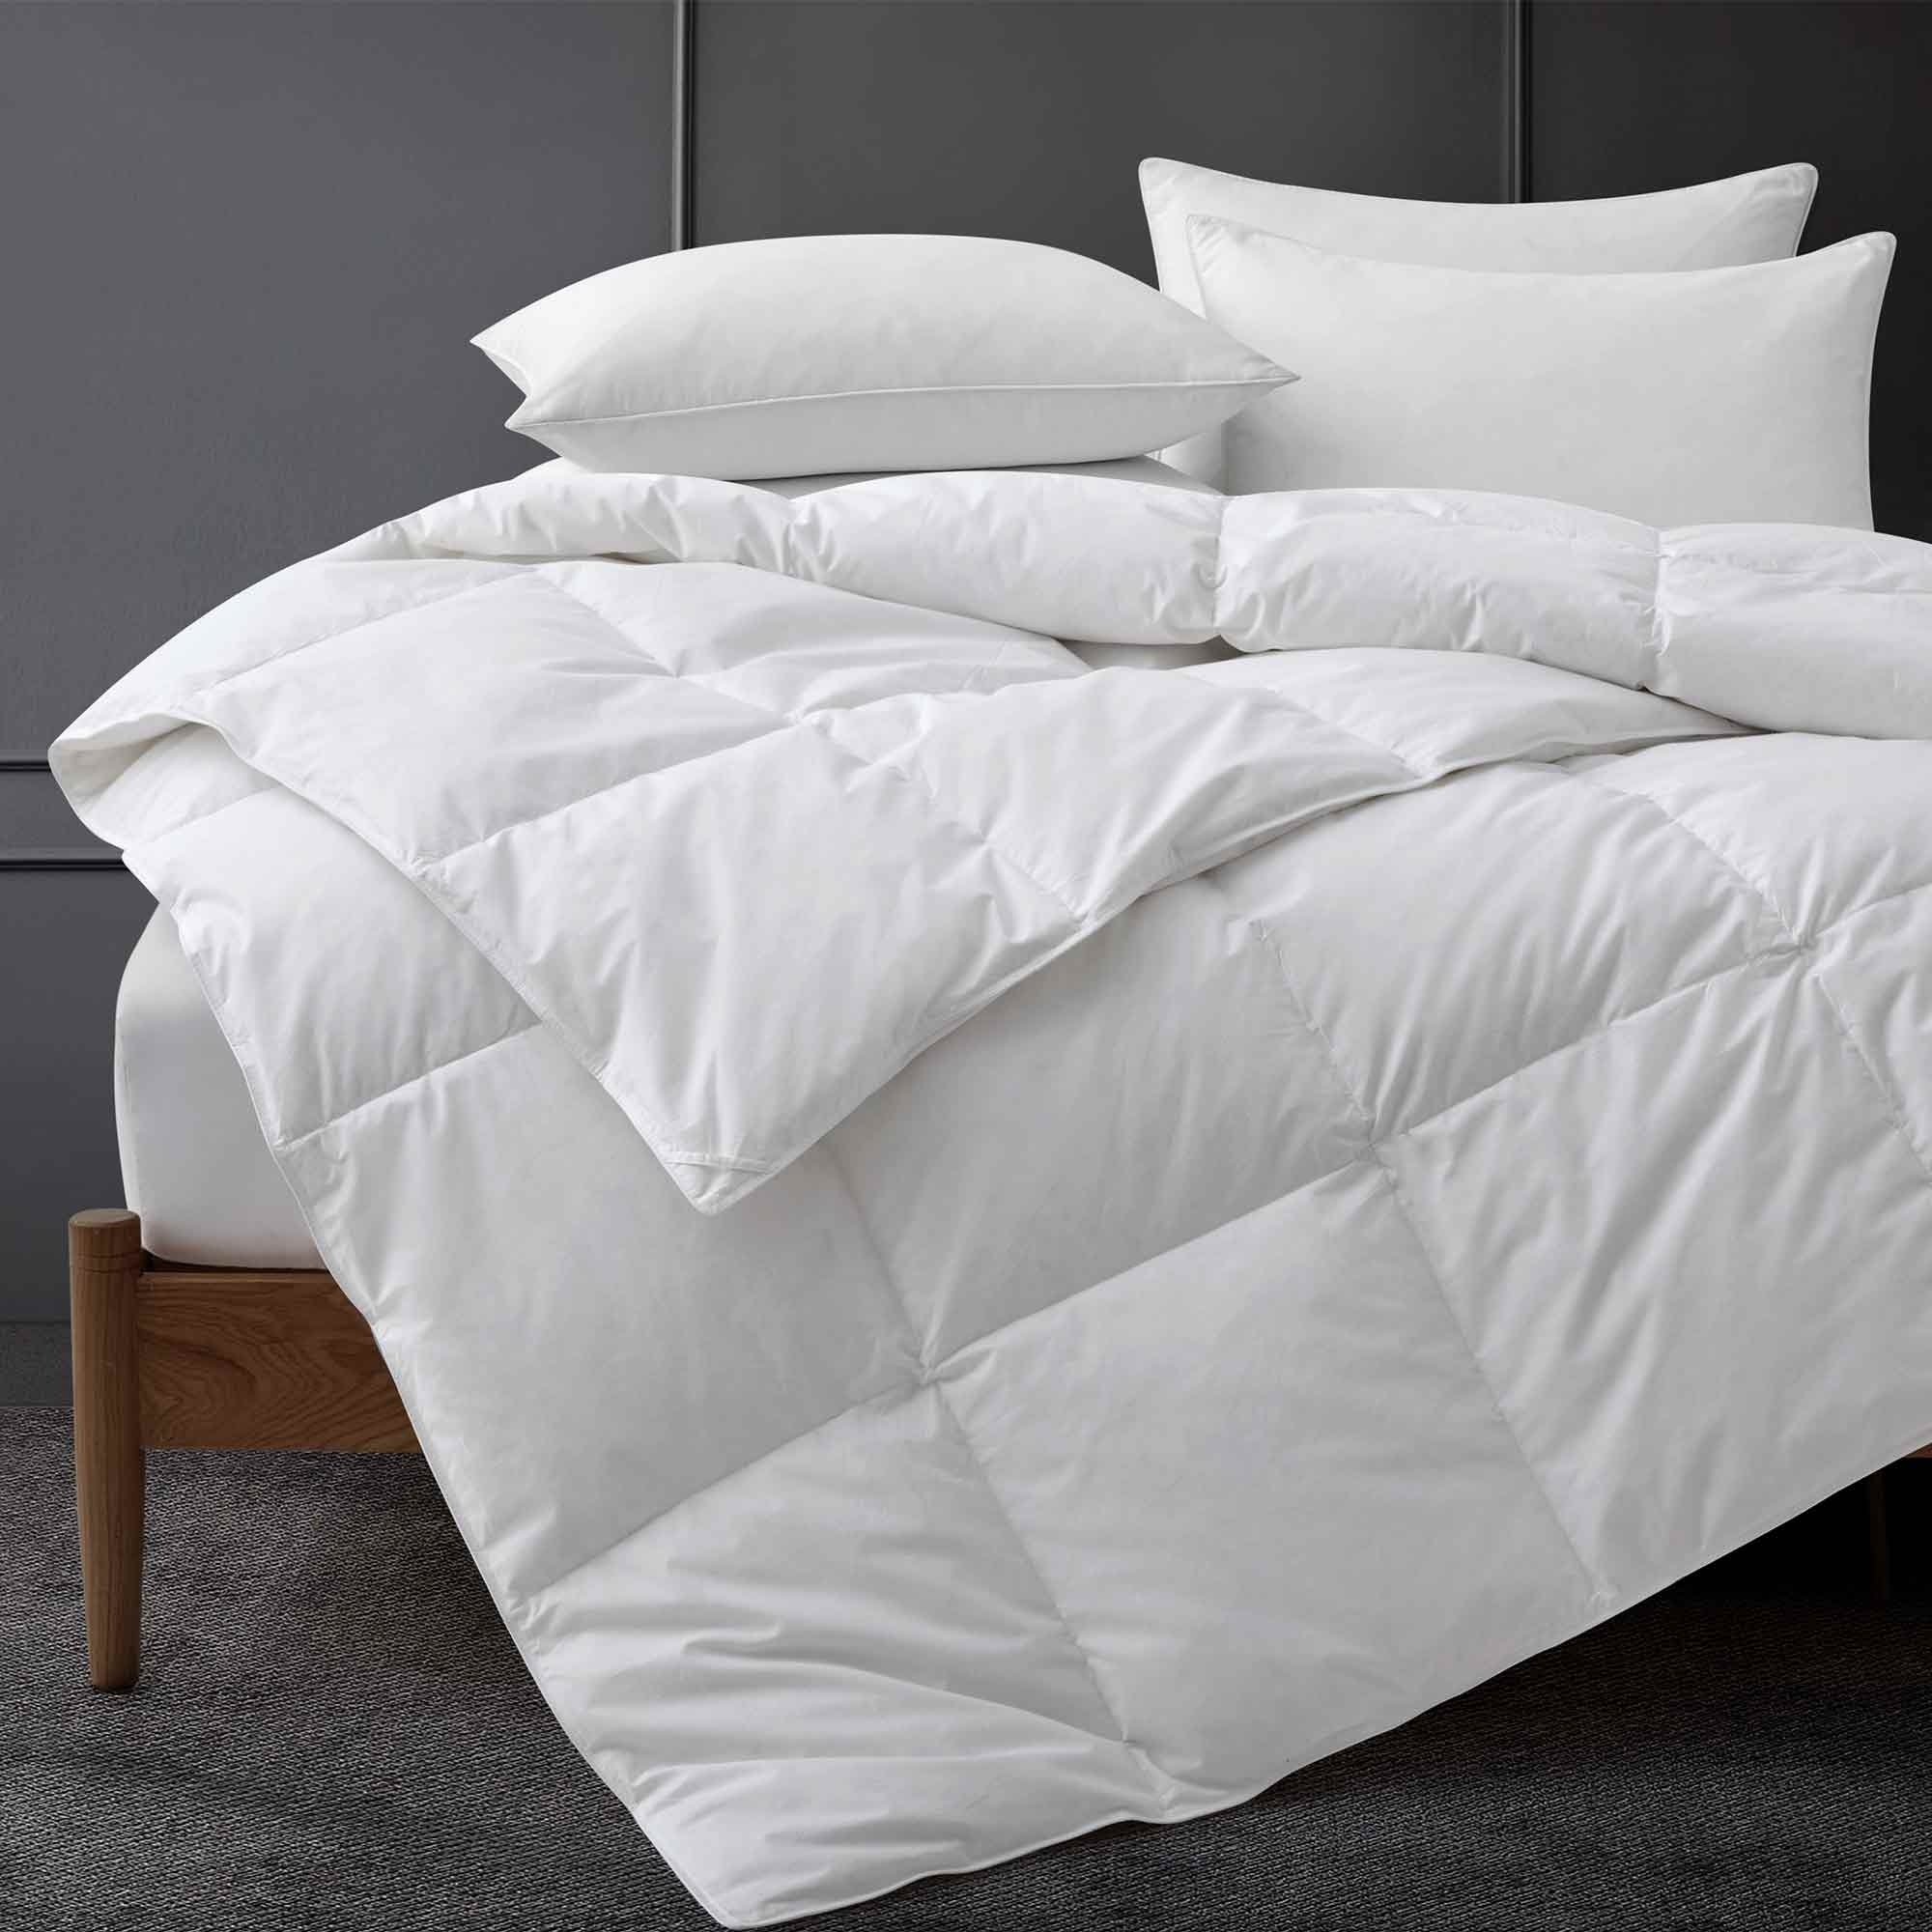 White Goose Feather And Down Comforters, Lightweight And Medium Weight Duvet Insert - Lightweight, Full/Queen